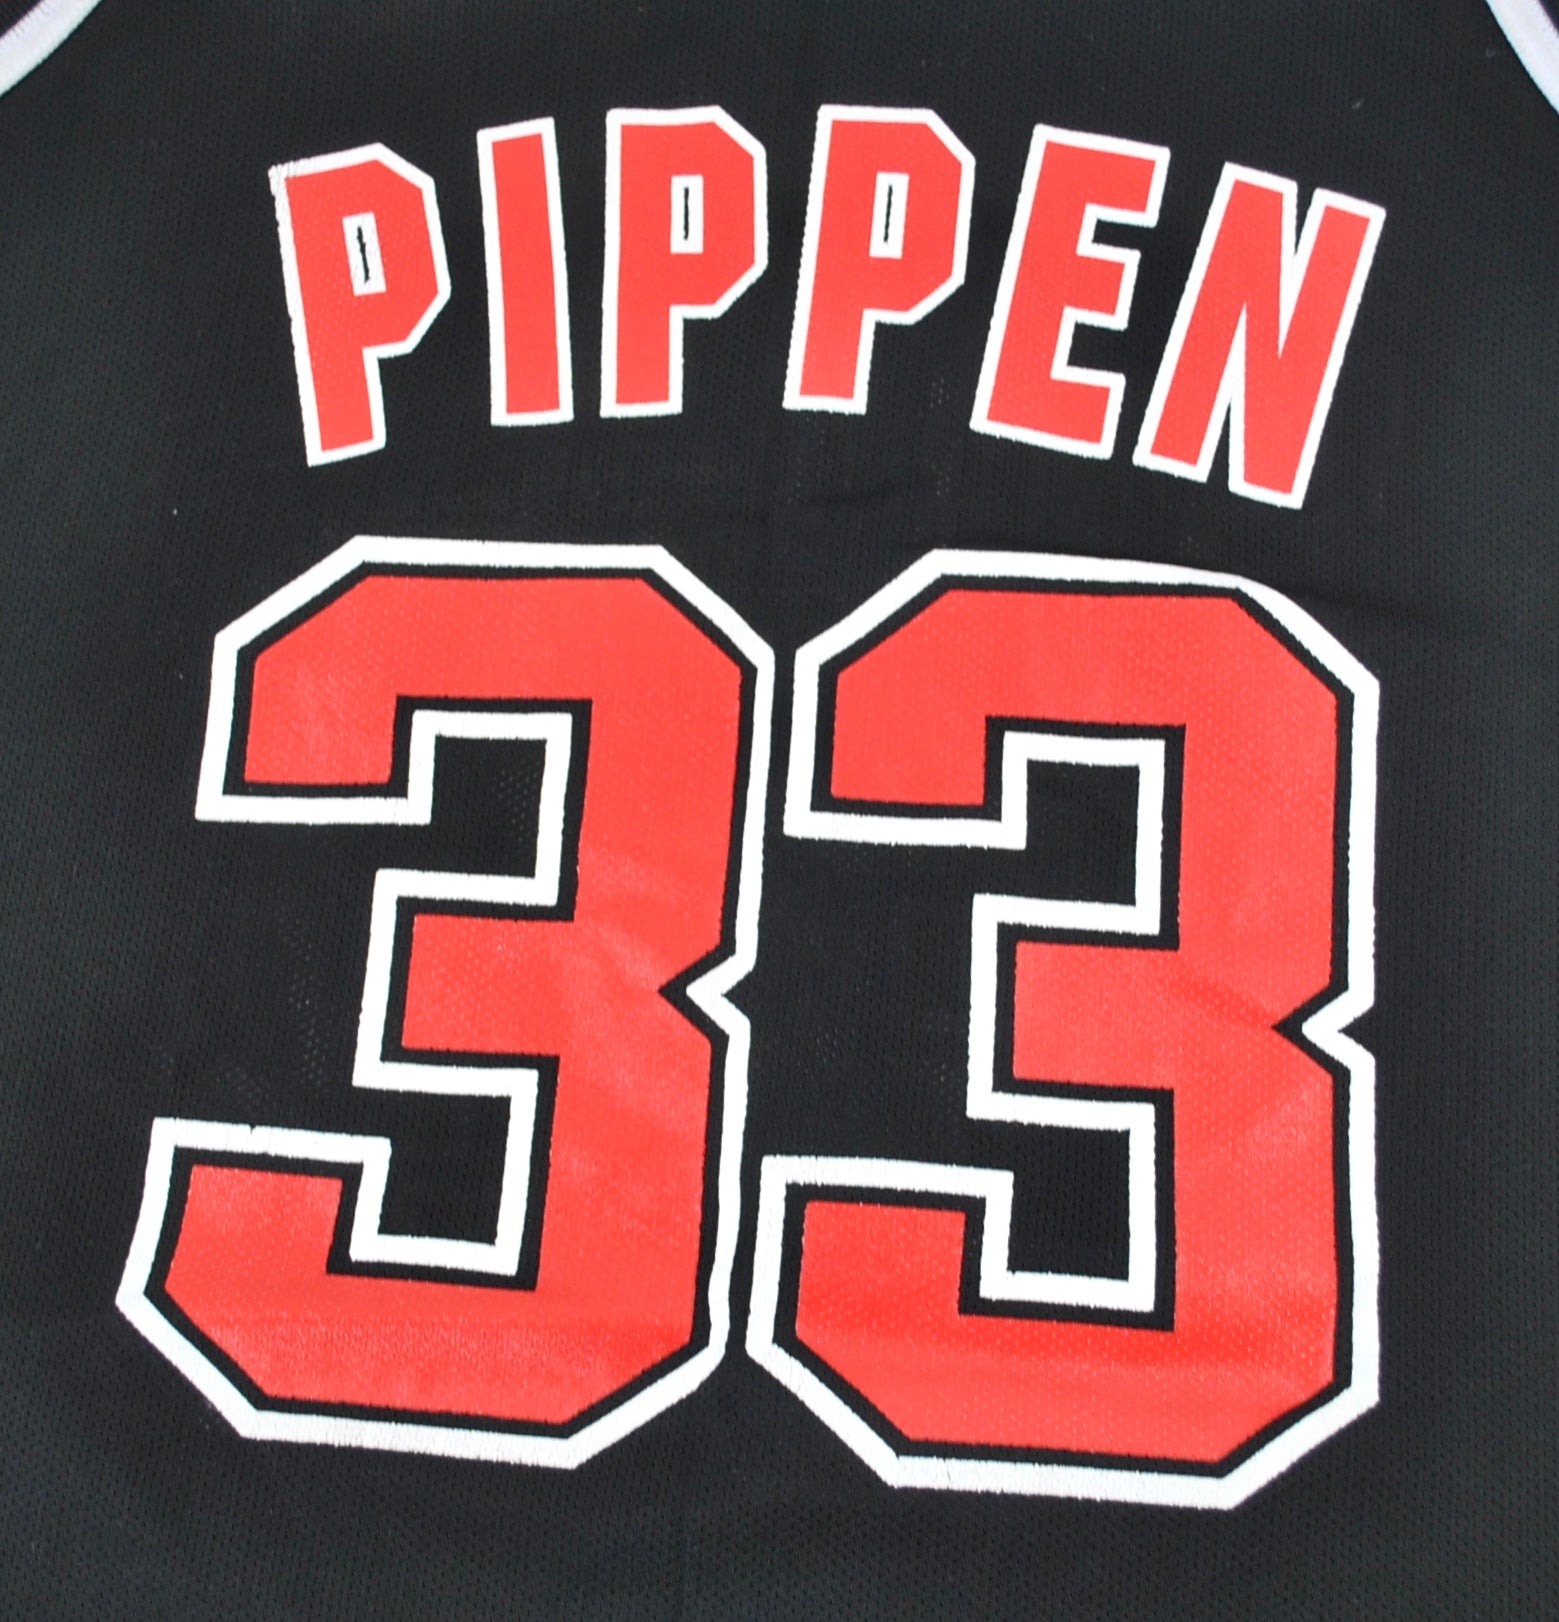 90's Scottie Pippen Chicago Bulls Champion NBA Jersey Size 48 – Rare VNTG